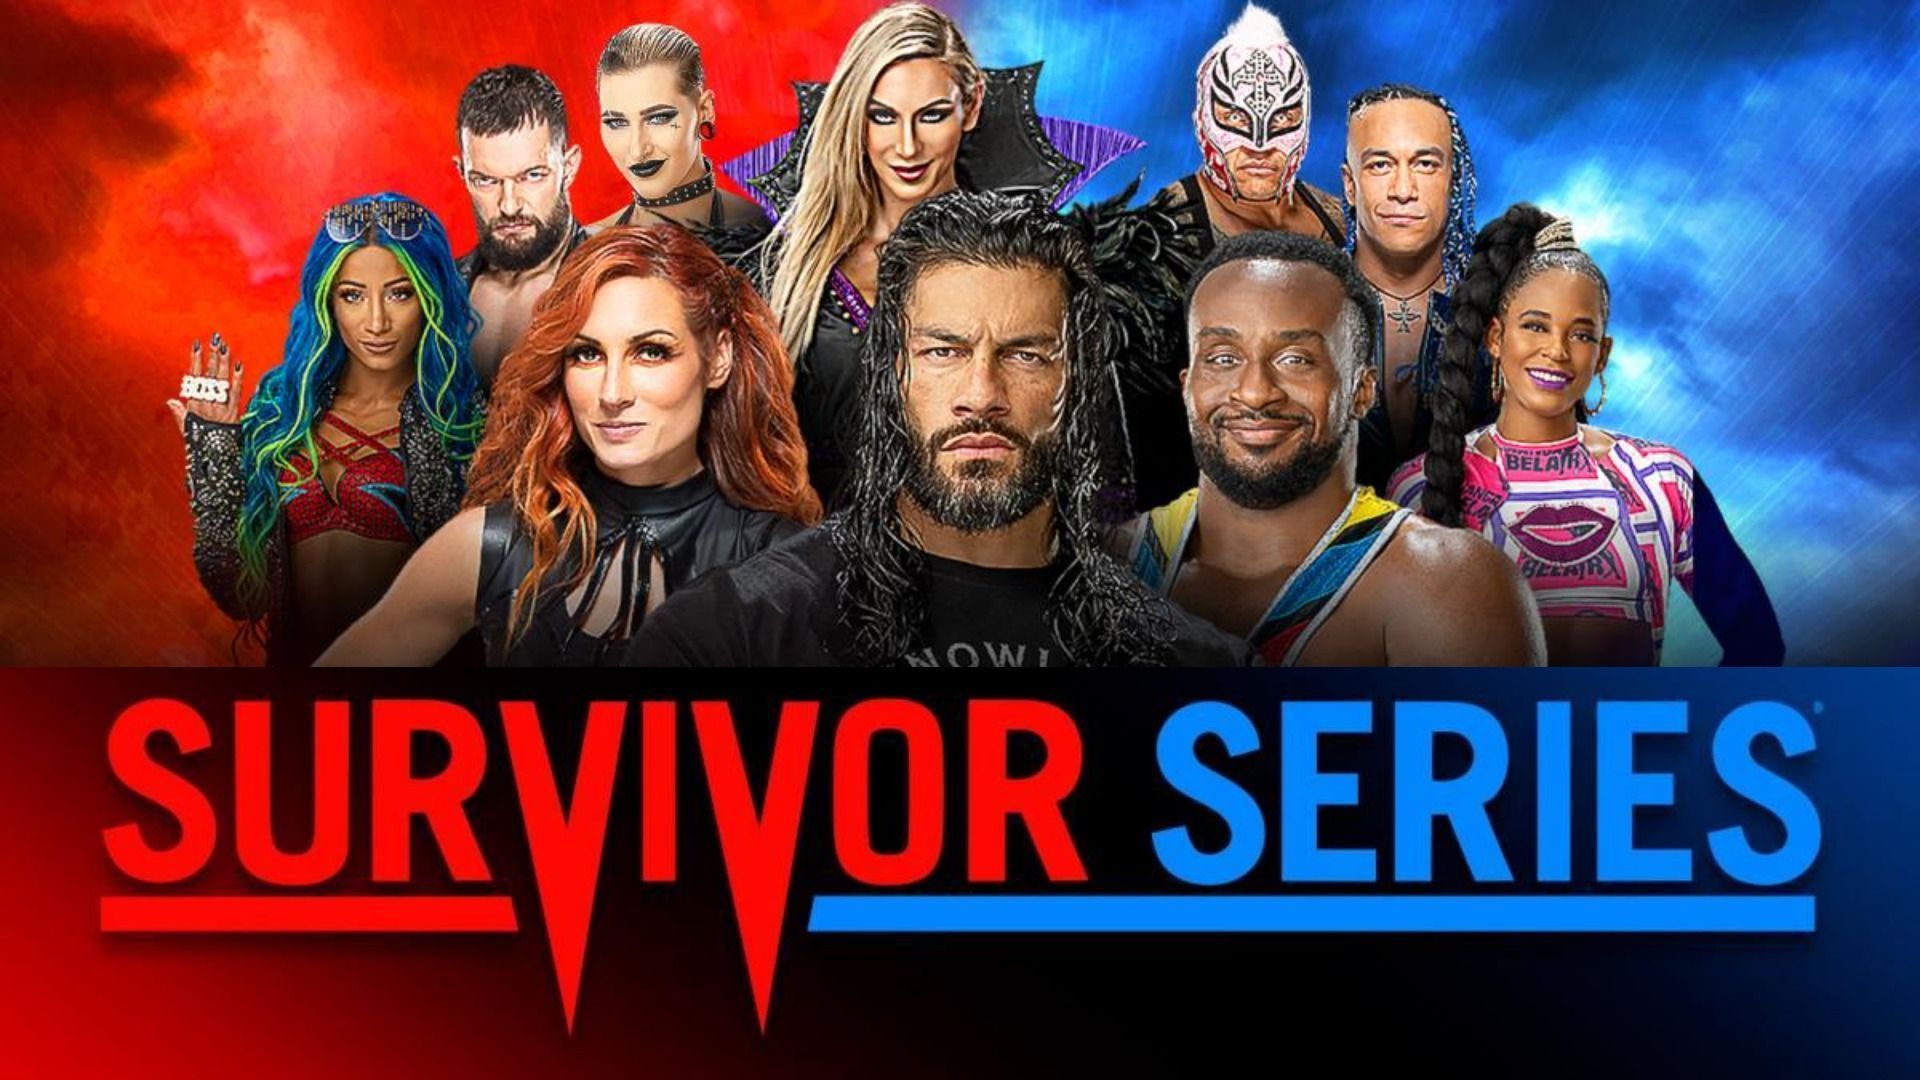 WWE Survivor Series 2021 looks exciting!